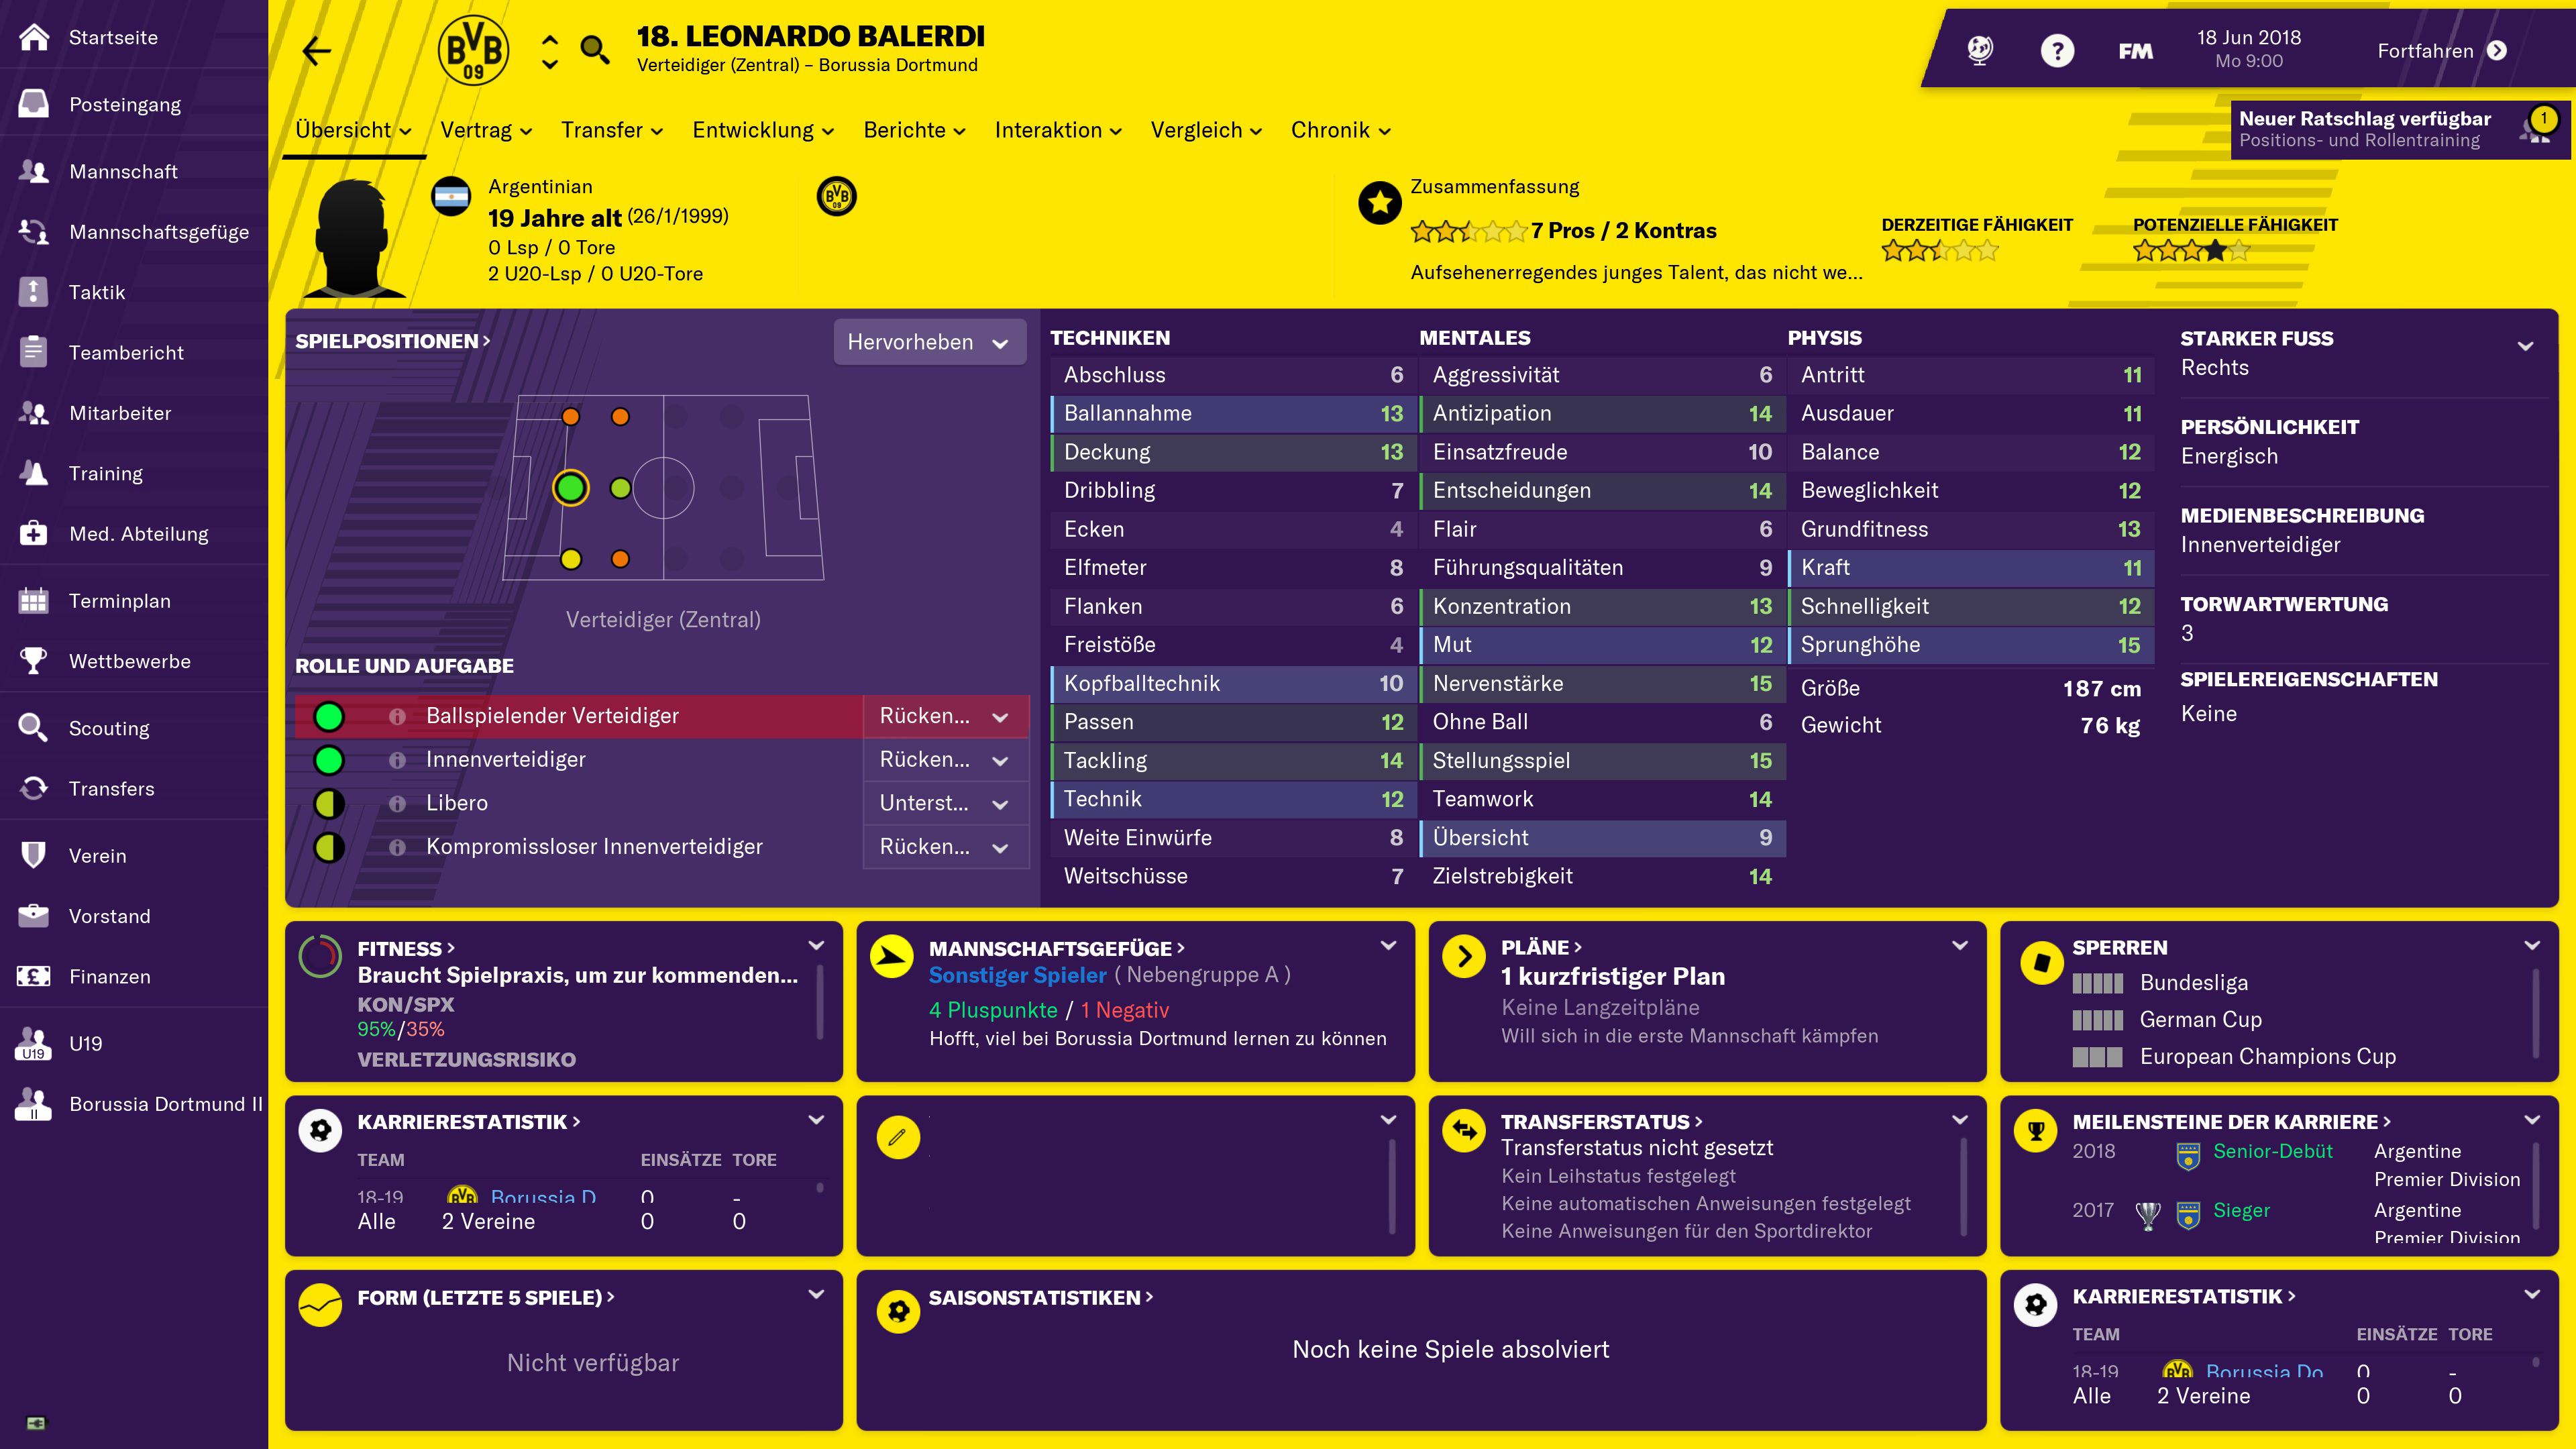 Leonardo Balerdi Player Profile